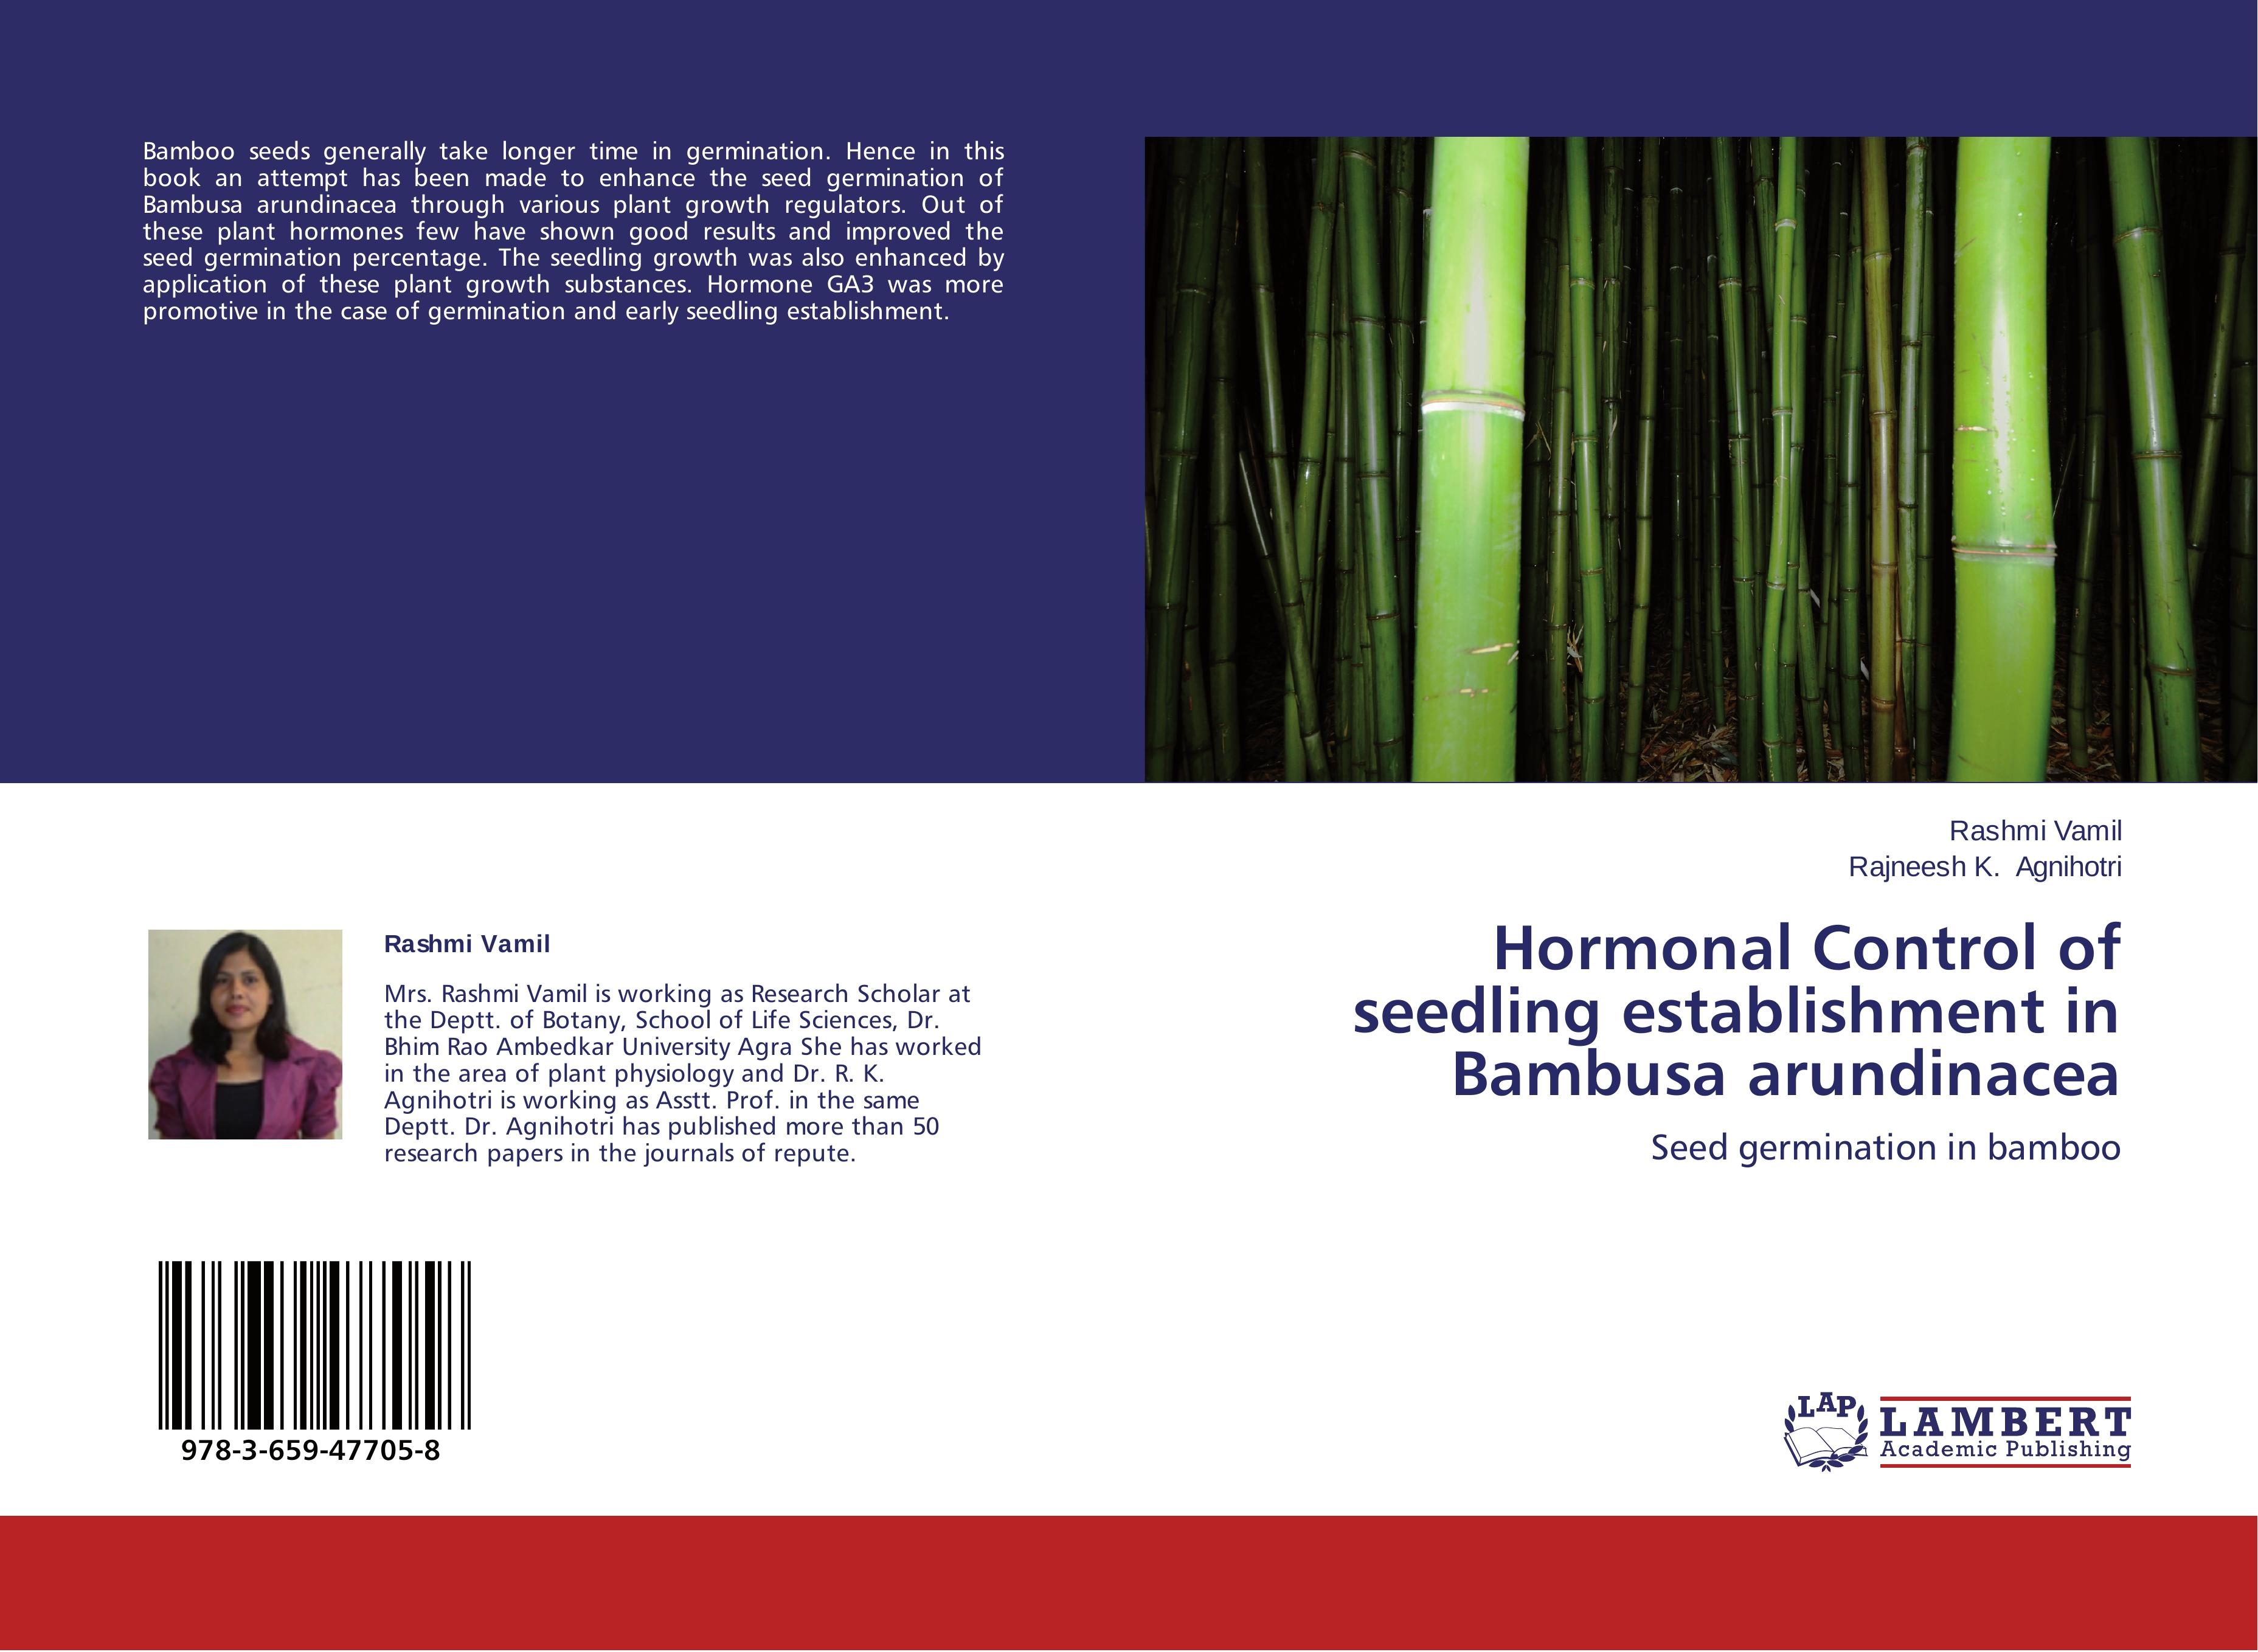 Hormonal Control of seedling establishment in Bambusa arundinacea - Rashmi Vamil Rajneesh K. Agnihotri